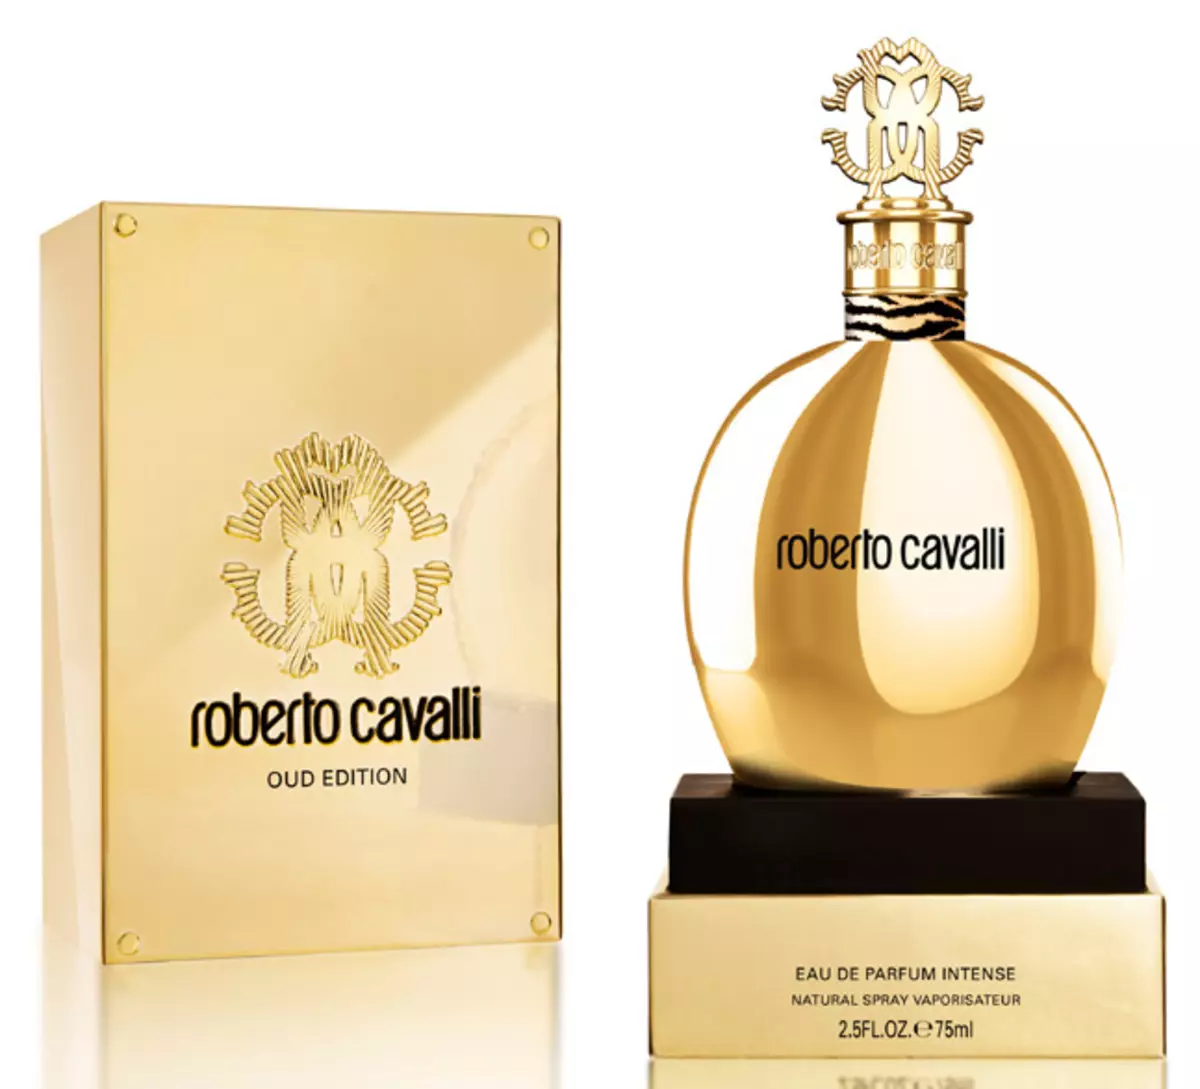 Perfume Roberto Cavalli: Perfume das Mulheres, Apenas Cavalli e outros Toilette Water, Aromas Roberto Cavalli Eau de Parfum, Paradiso e Acqua 25296_17